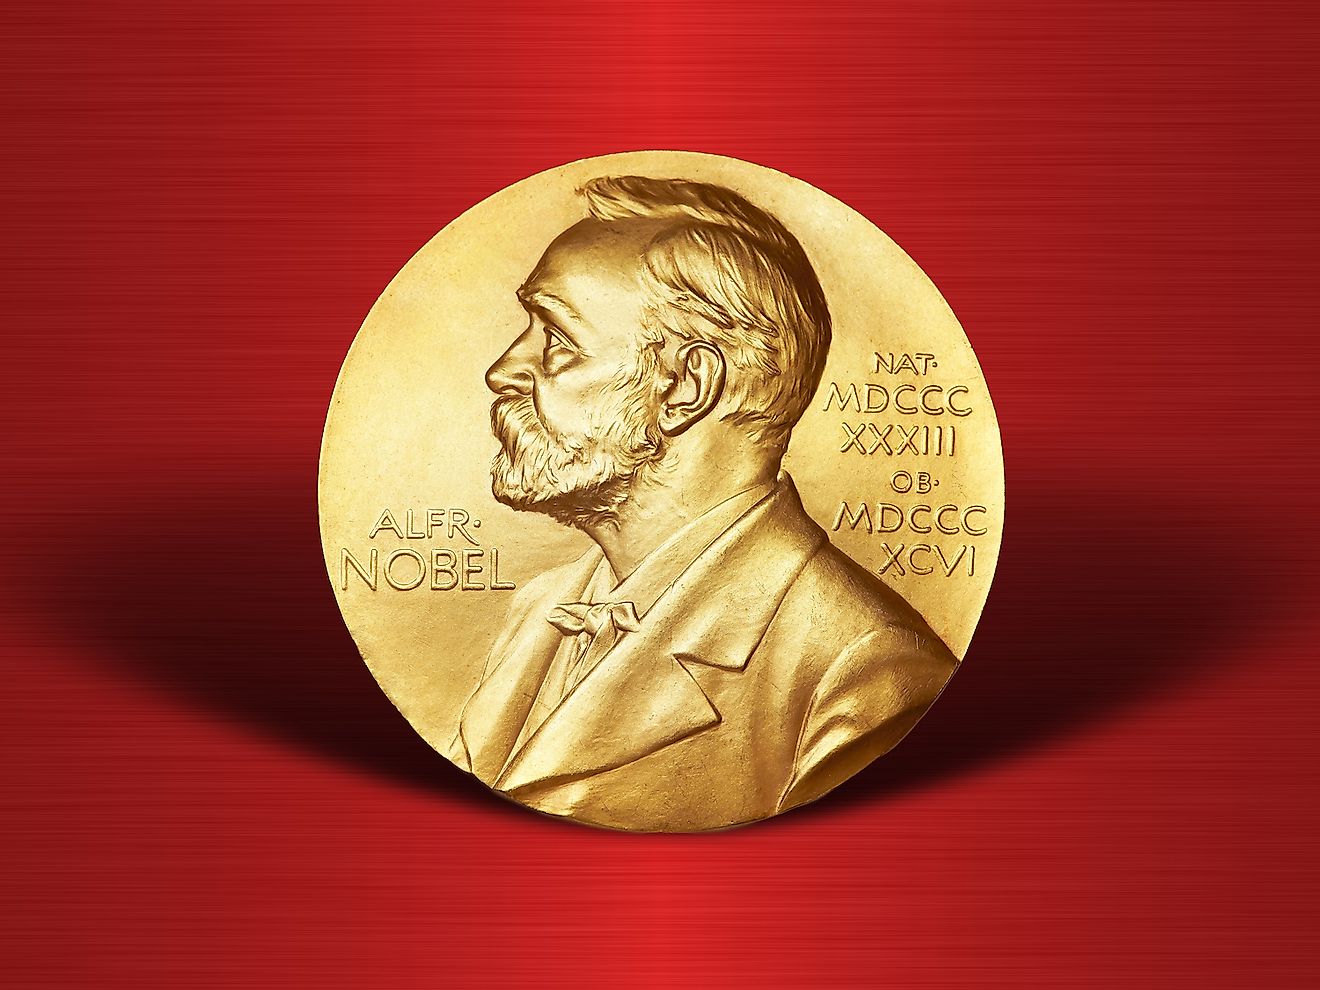 The Nobel Prize. Image credit: Paramonov Alexander/Shutterstock.com